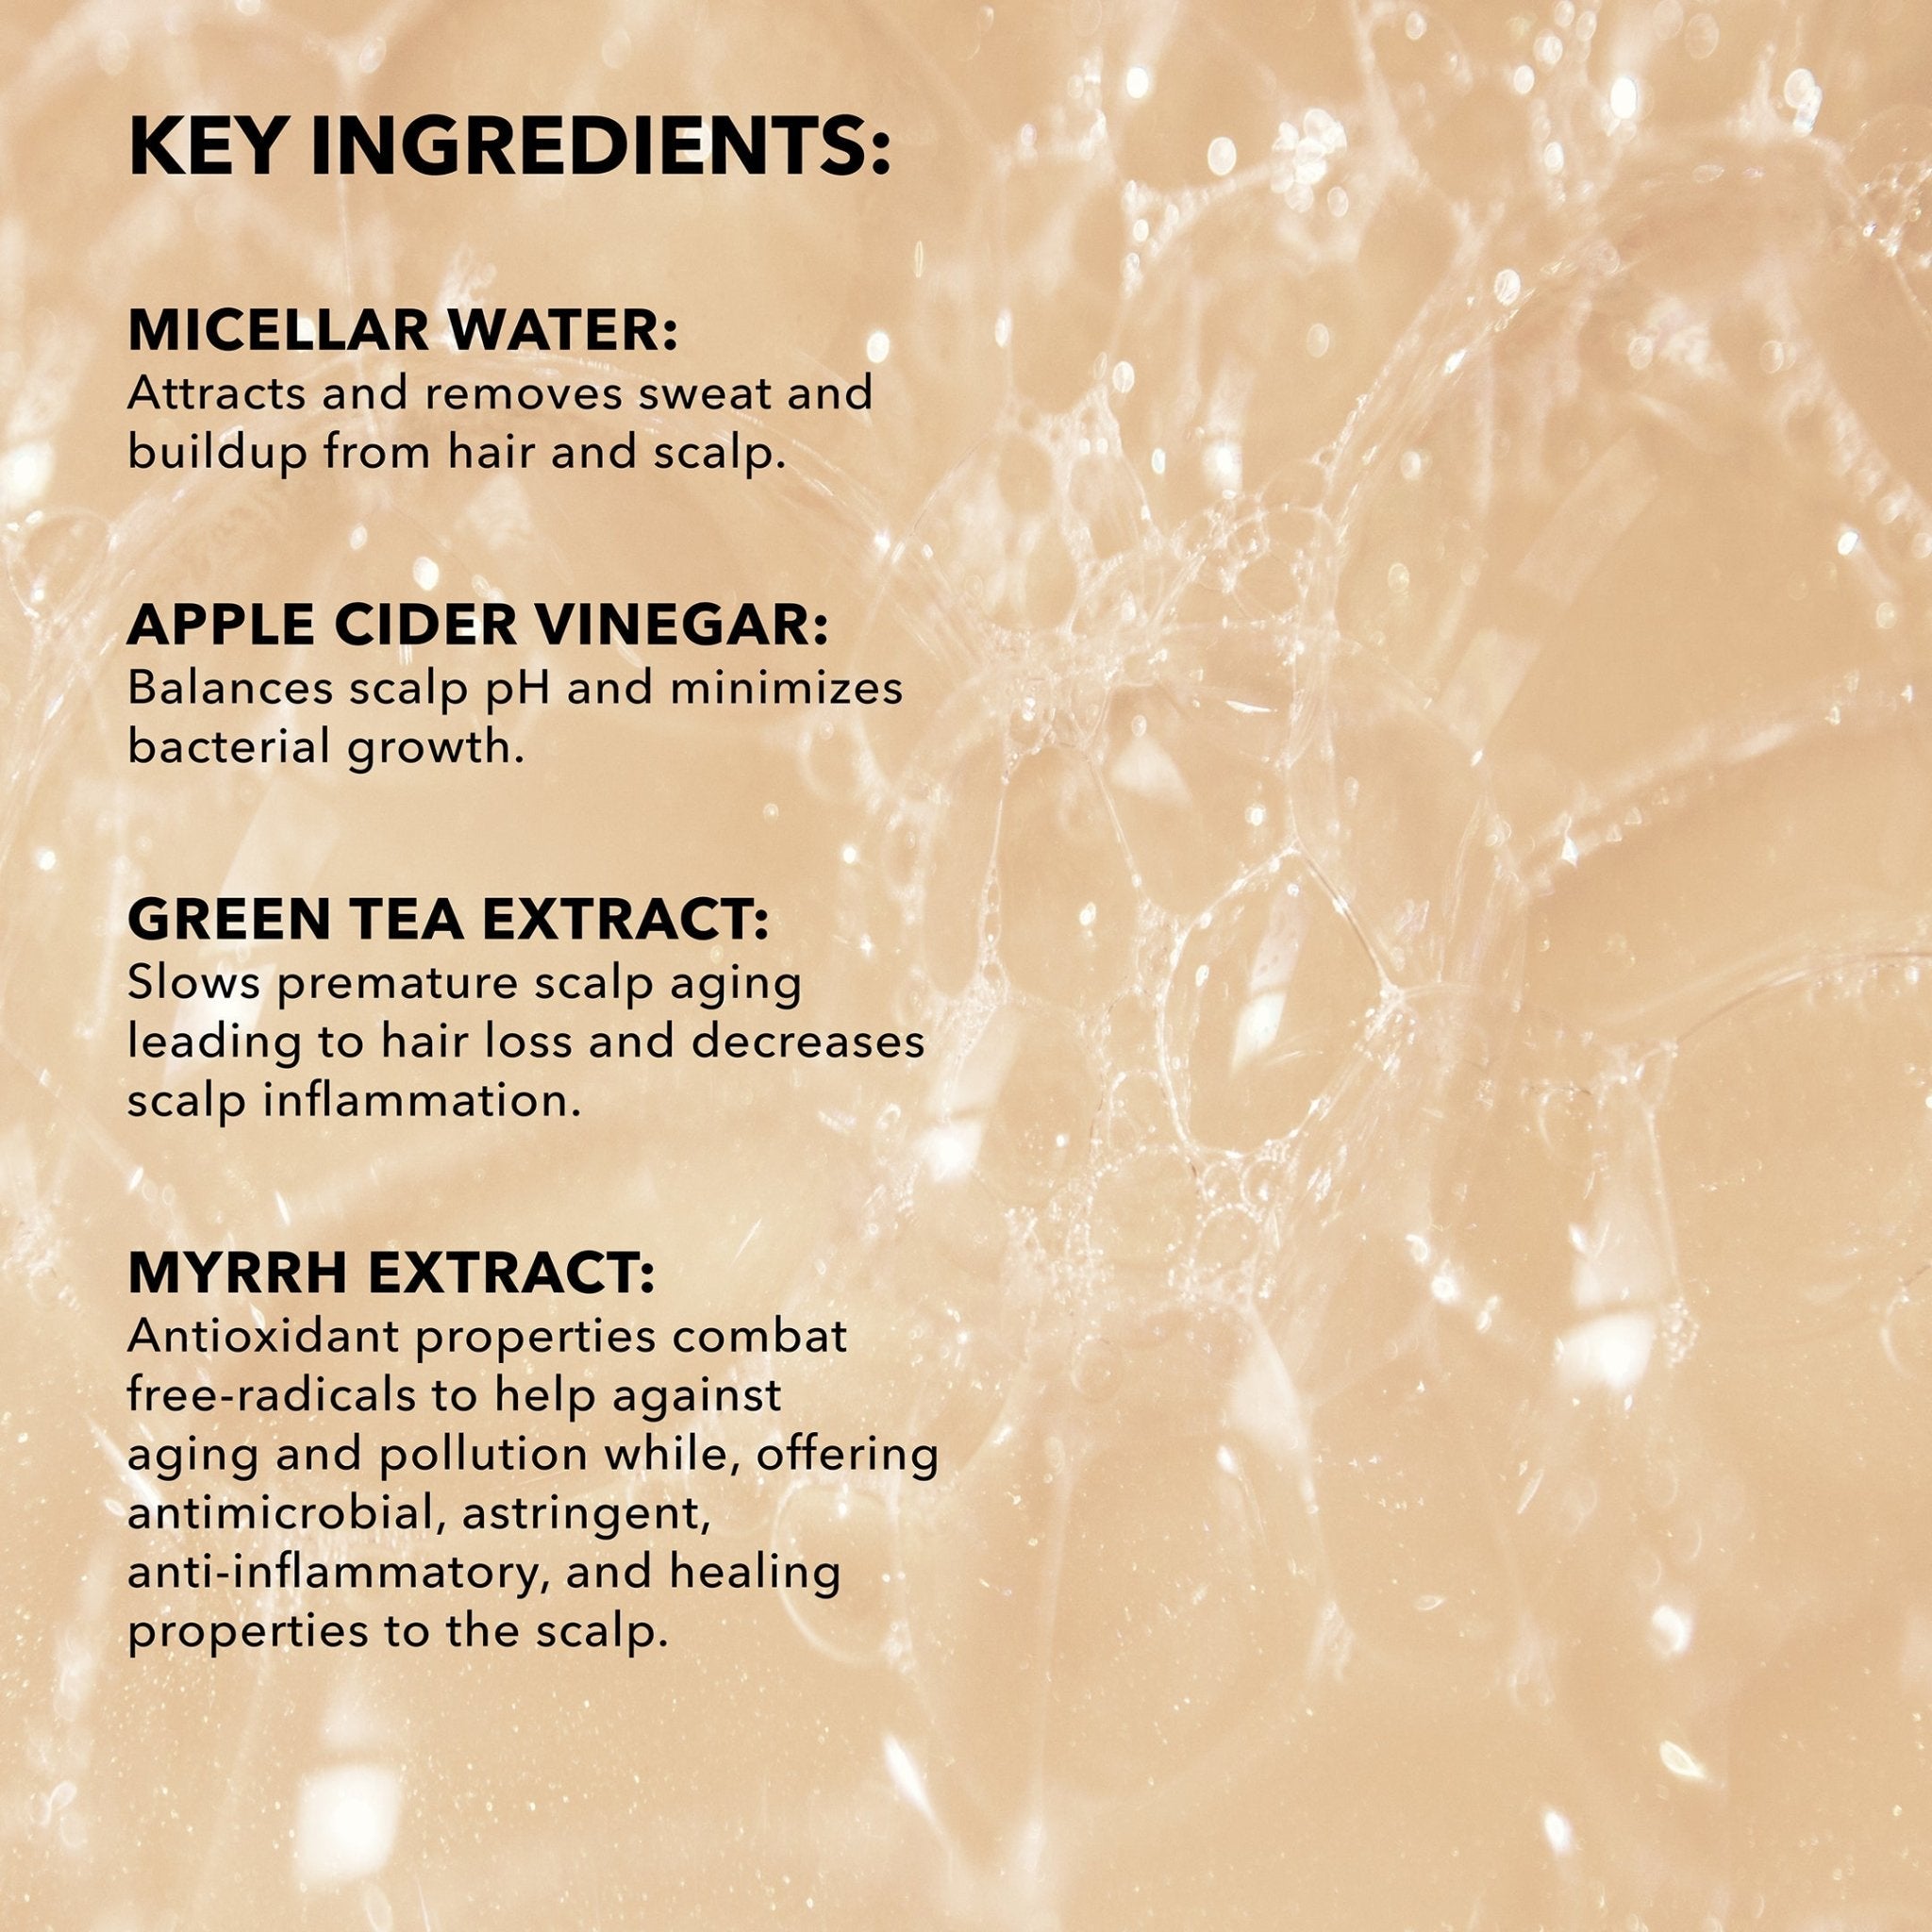 Root Refresh Micellar Rinse Dry Shampoo Alternative with Apple Cider Vinegar - SUNDAY II SUNDAY